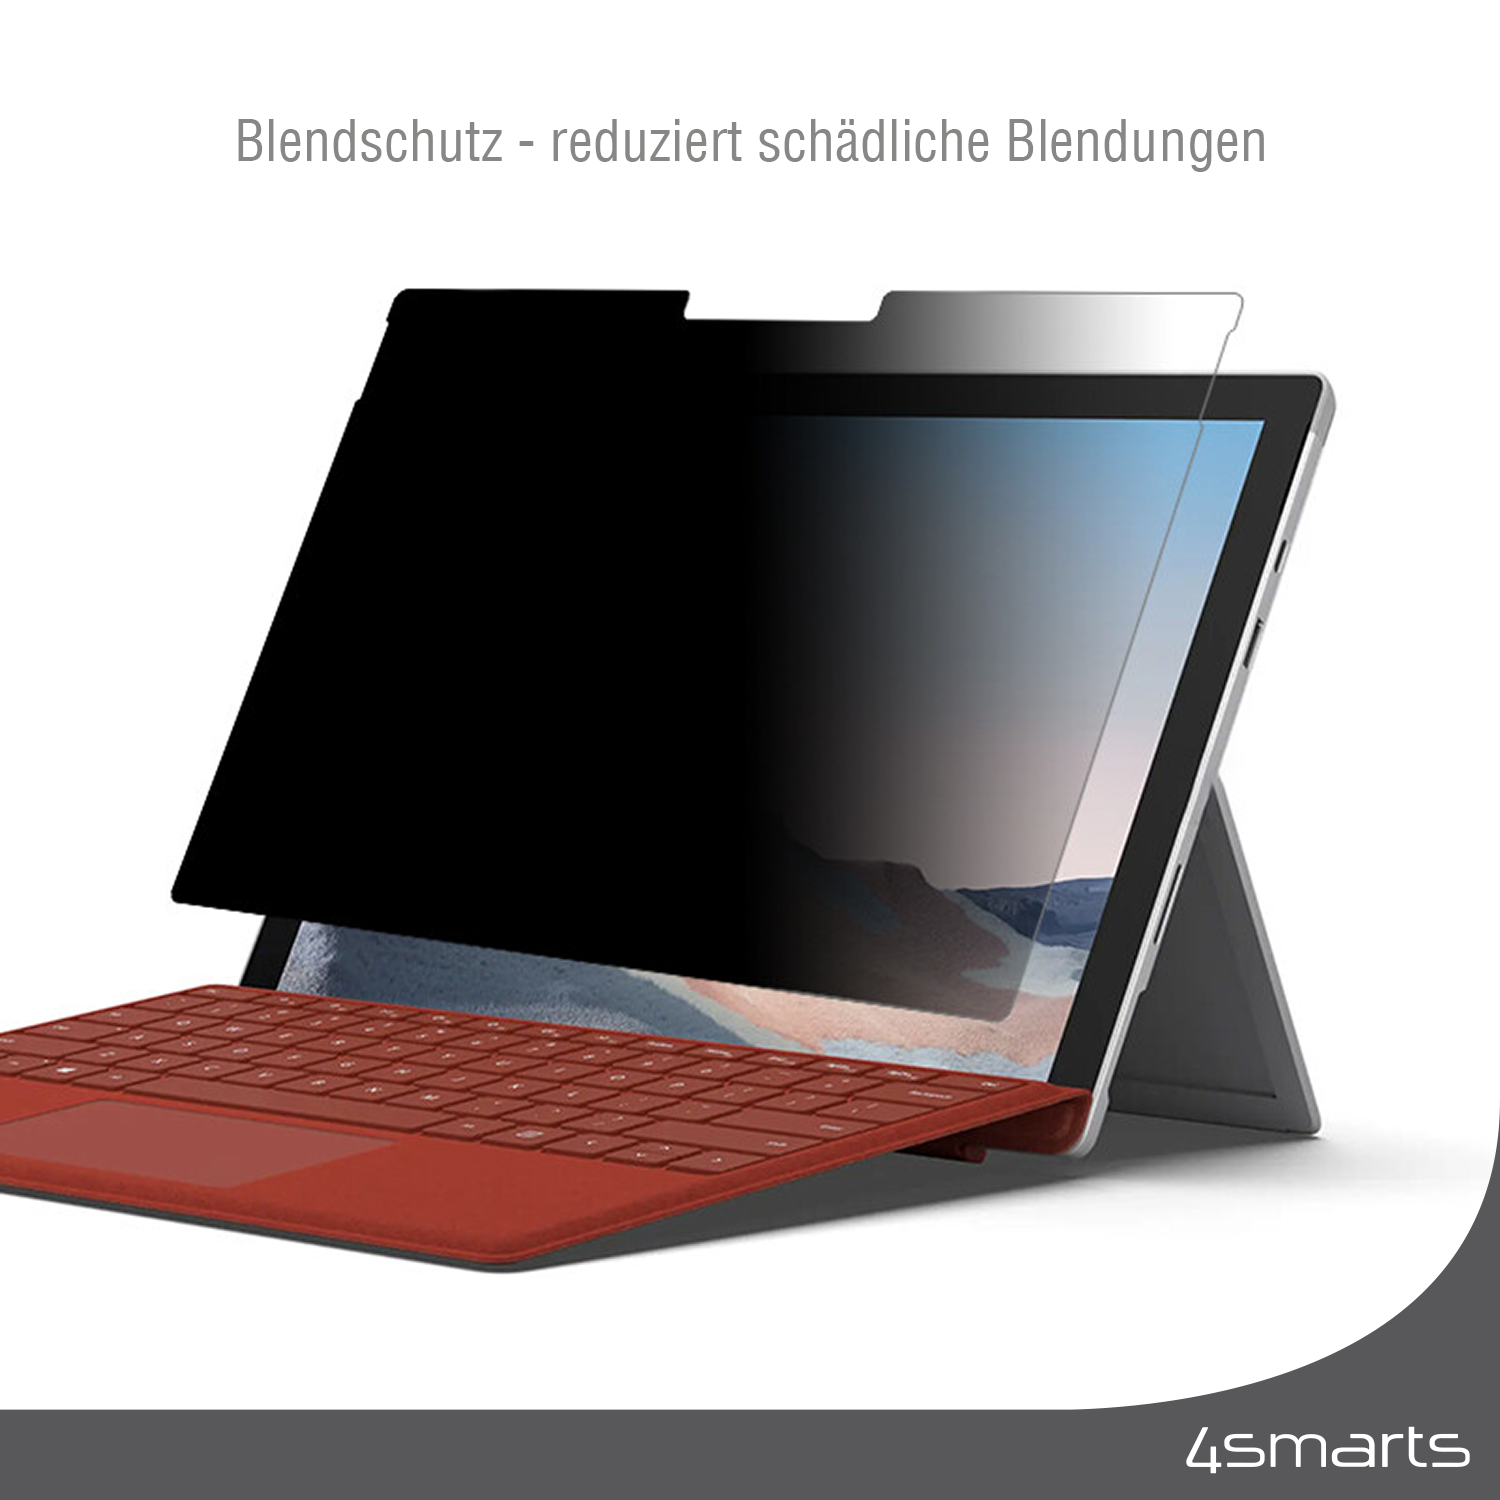 Smartprotect Surface 13,5 Zoll) Microsoft Laptop 4SMARTS Filter Displayschutzfolie(für Privacy 4